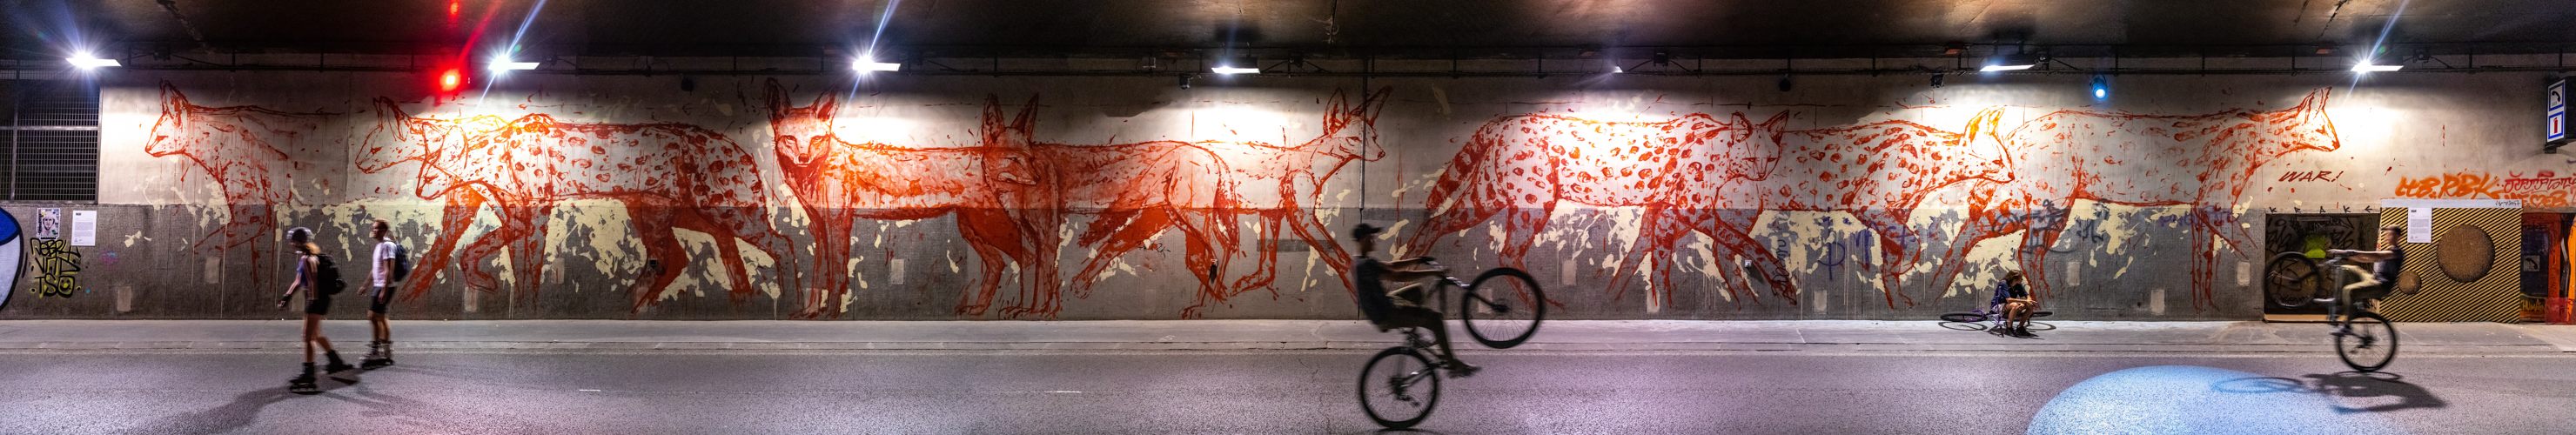 Tunnel des Tuileries - L’art urbain en bord de Seine - Août 2022